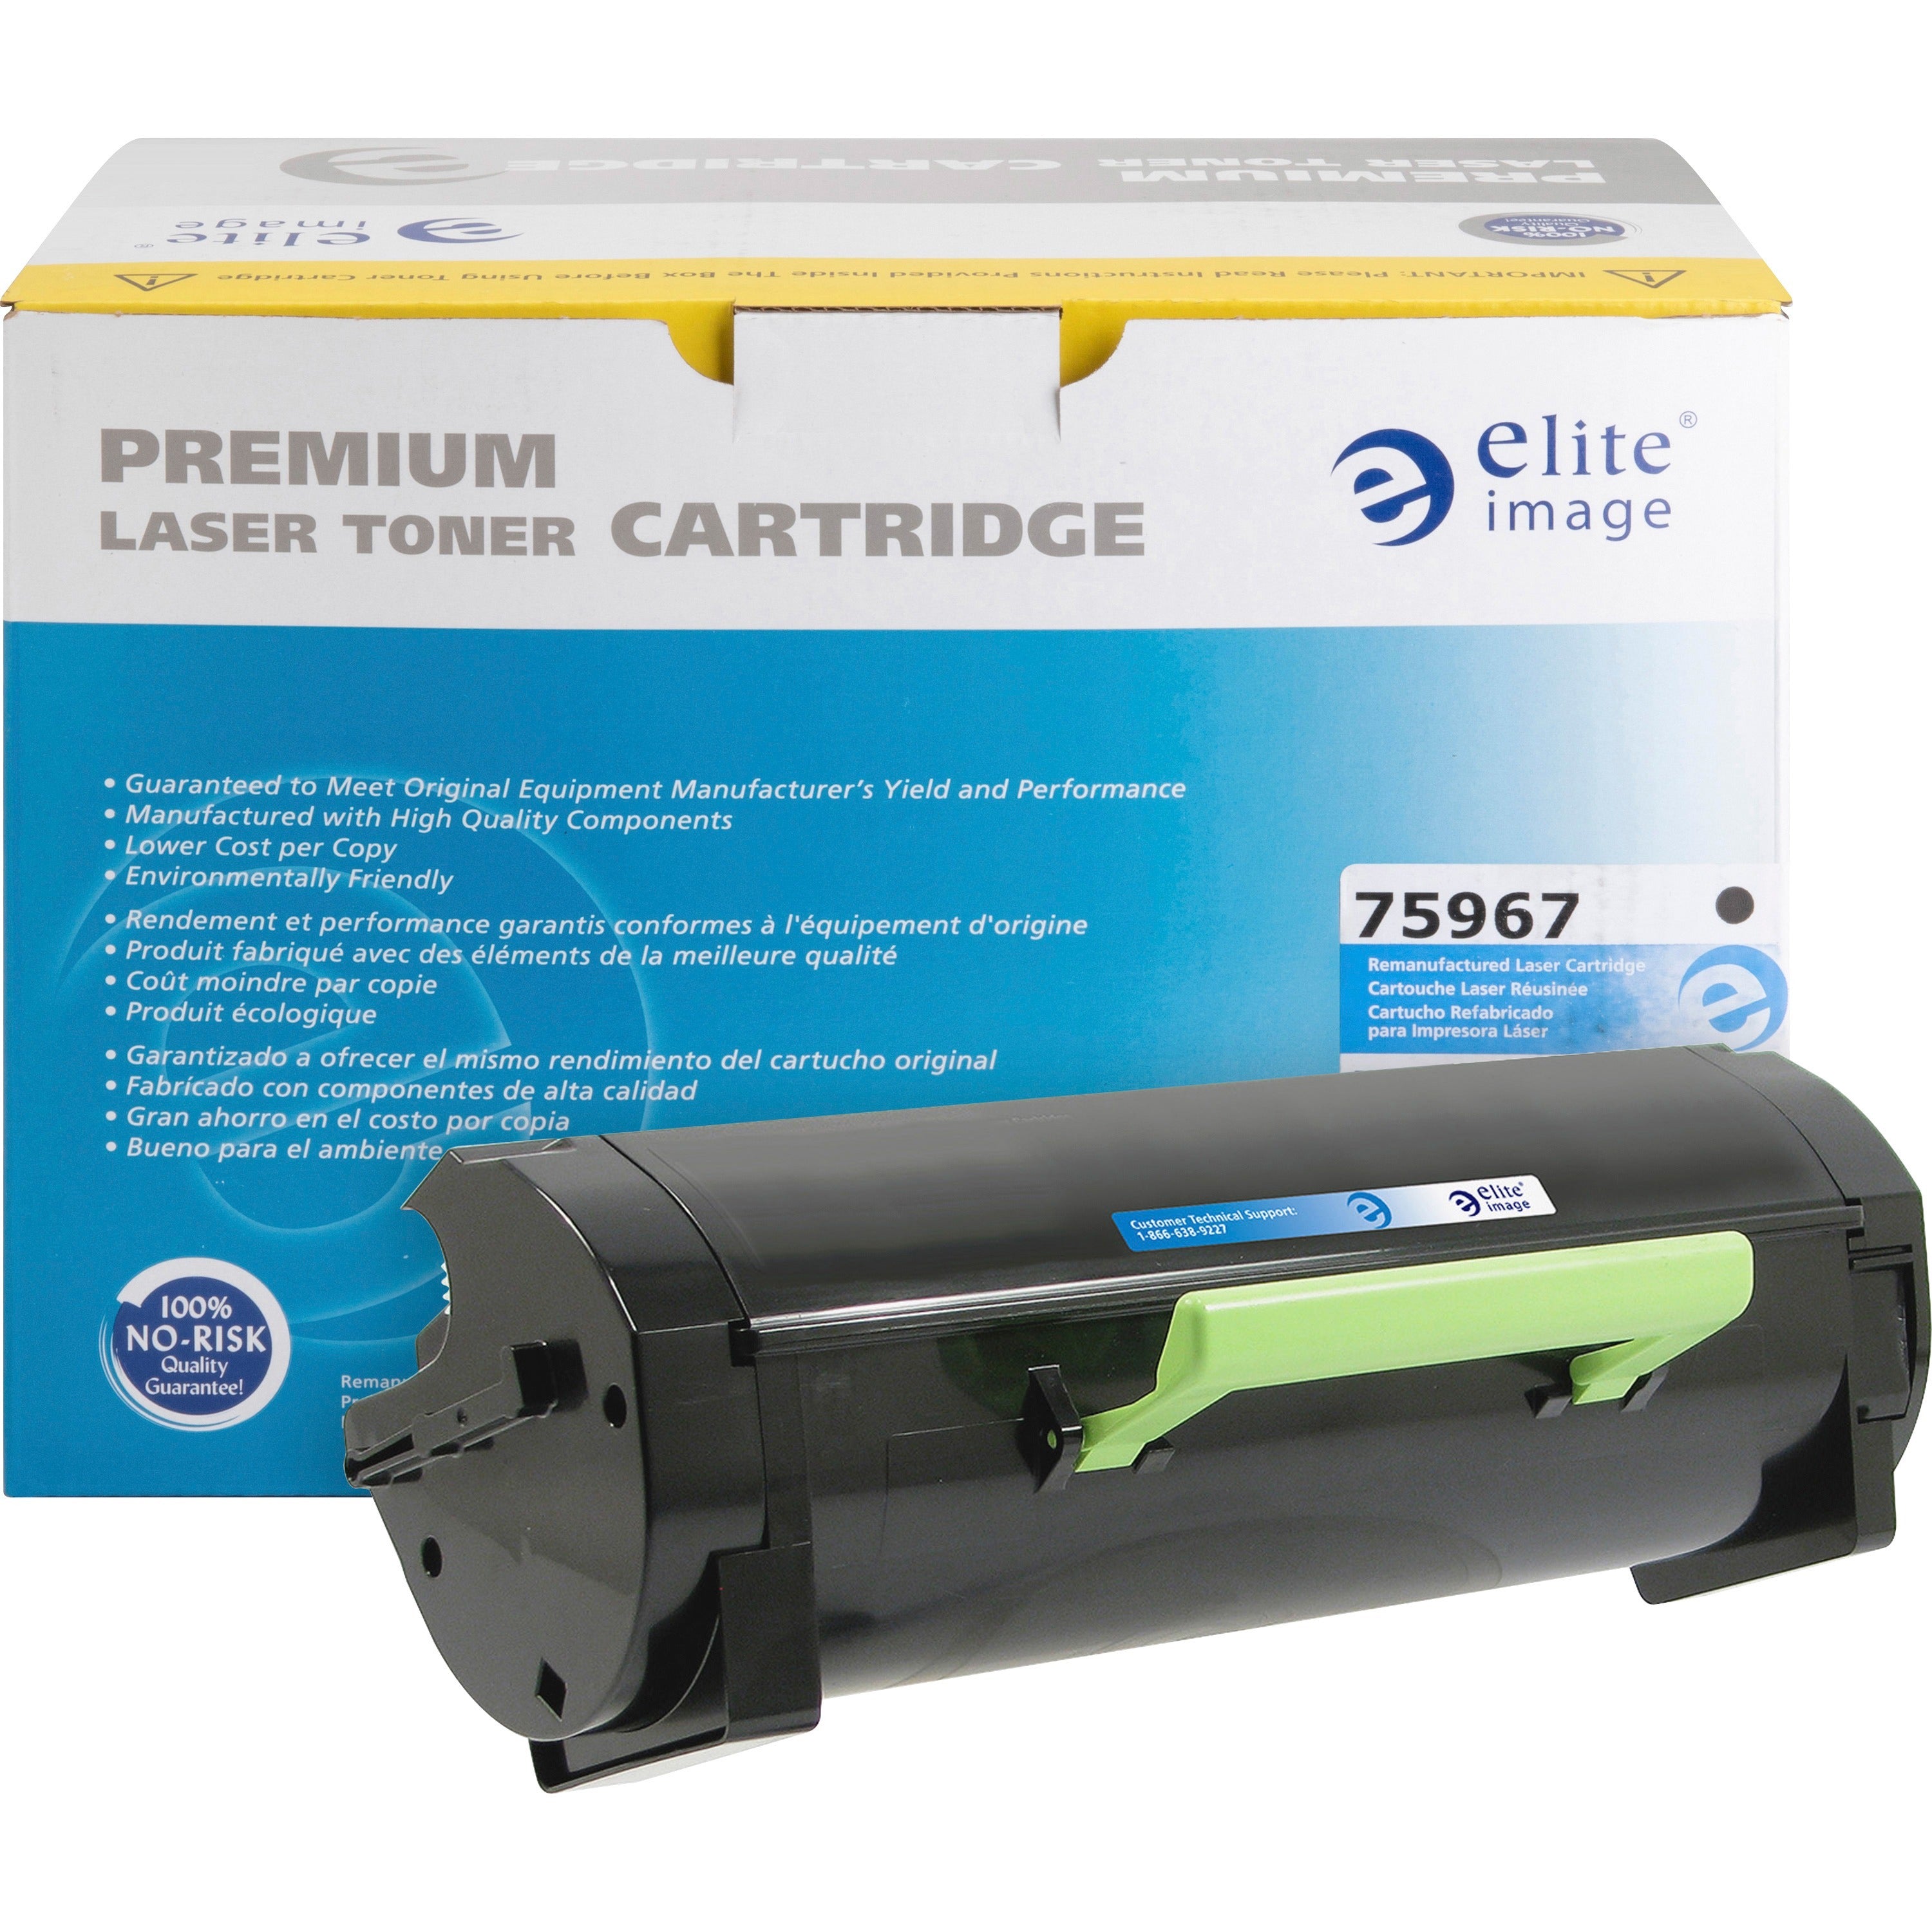 Elite Image Remanufactured Toner Cartridge Alternative For Dell - Laser - High Yield - Black - 8500 Pages - 1 Each - 1